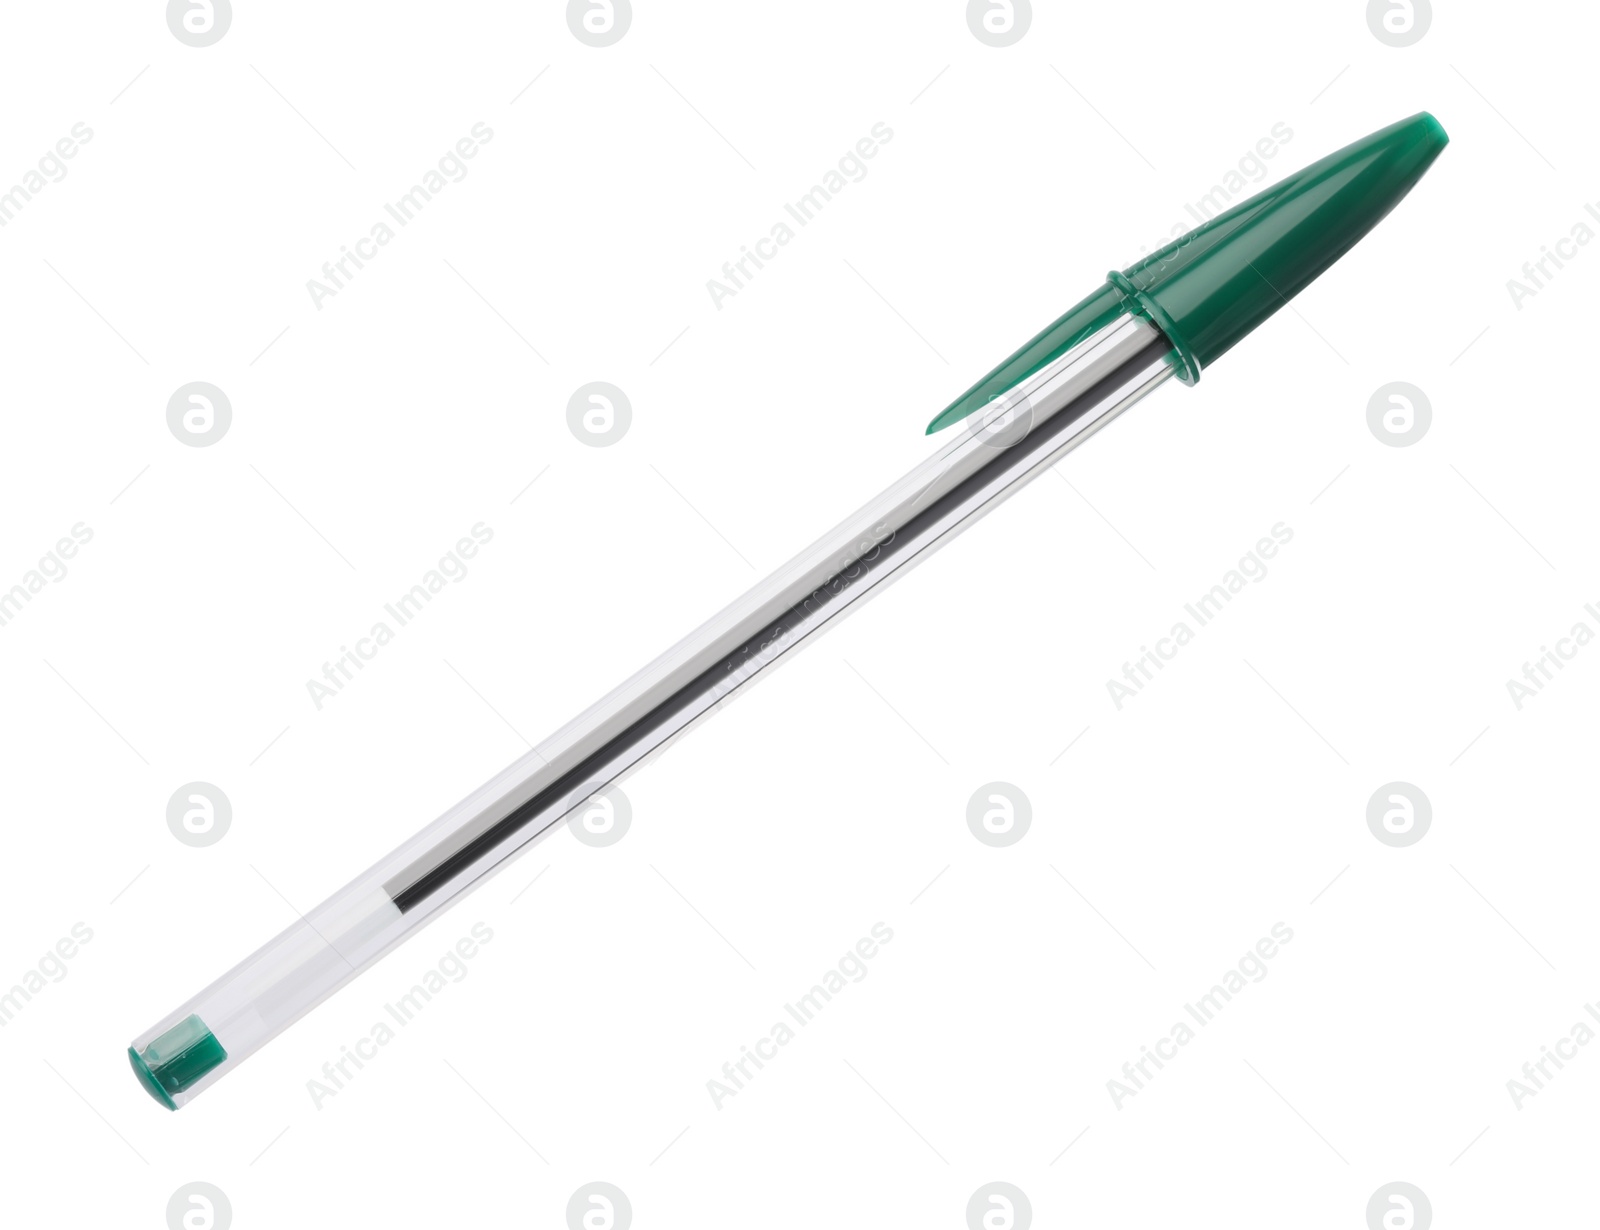 Photo of New stylish green pen isolated on white